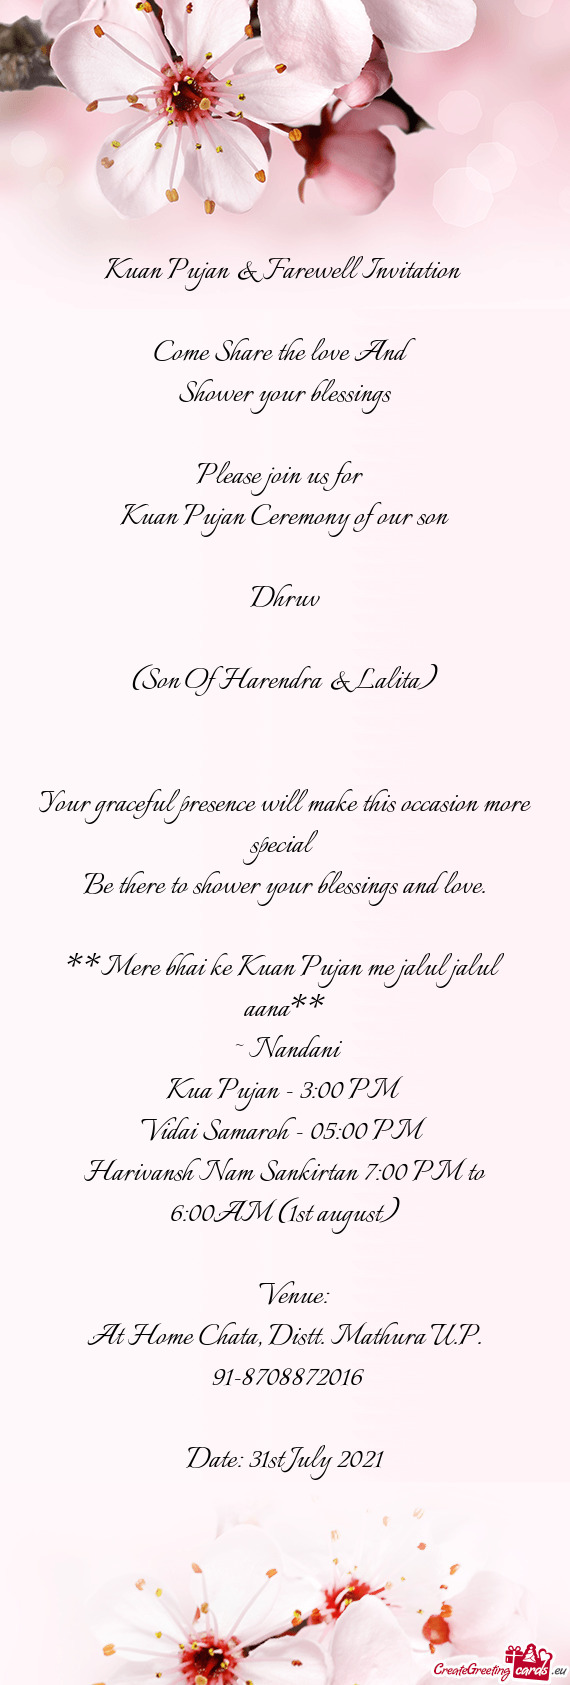 Kuan Pujan & Farewell Invitation